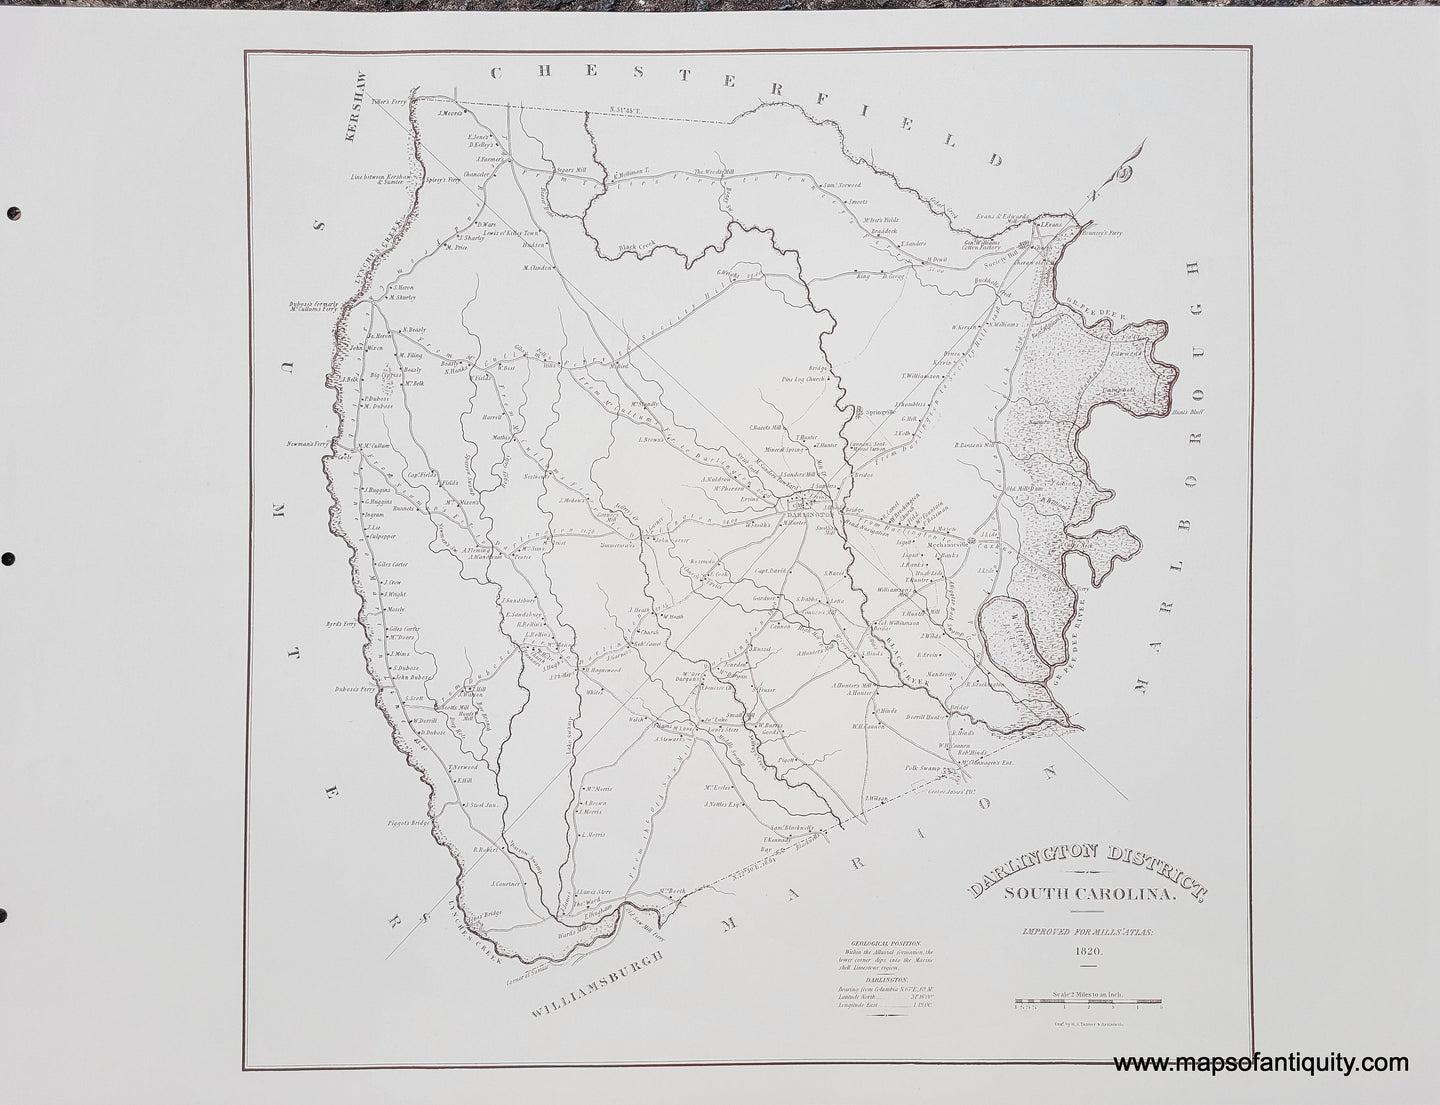 Reproduction-Darlington District, South Carolina-1825 / 1979--Maps-Of-Antiquity